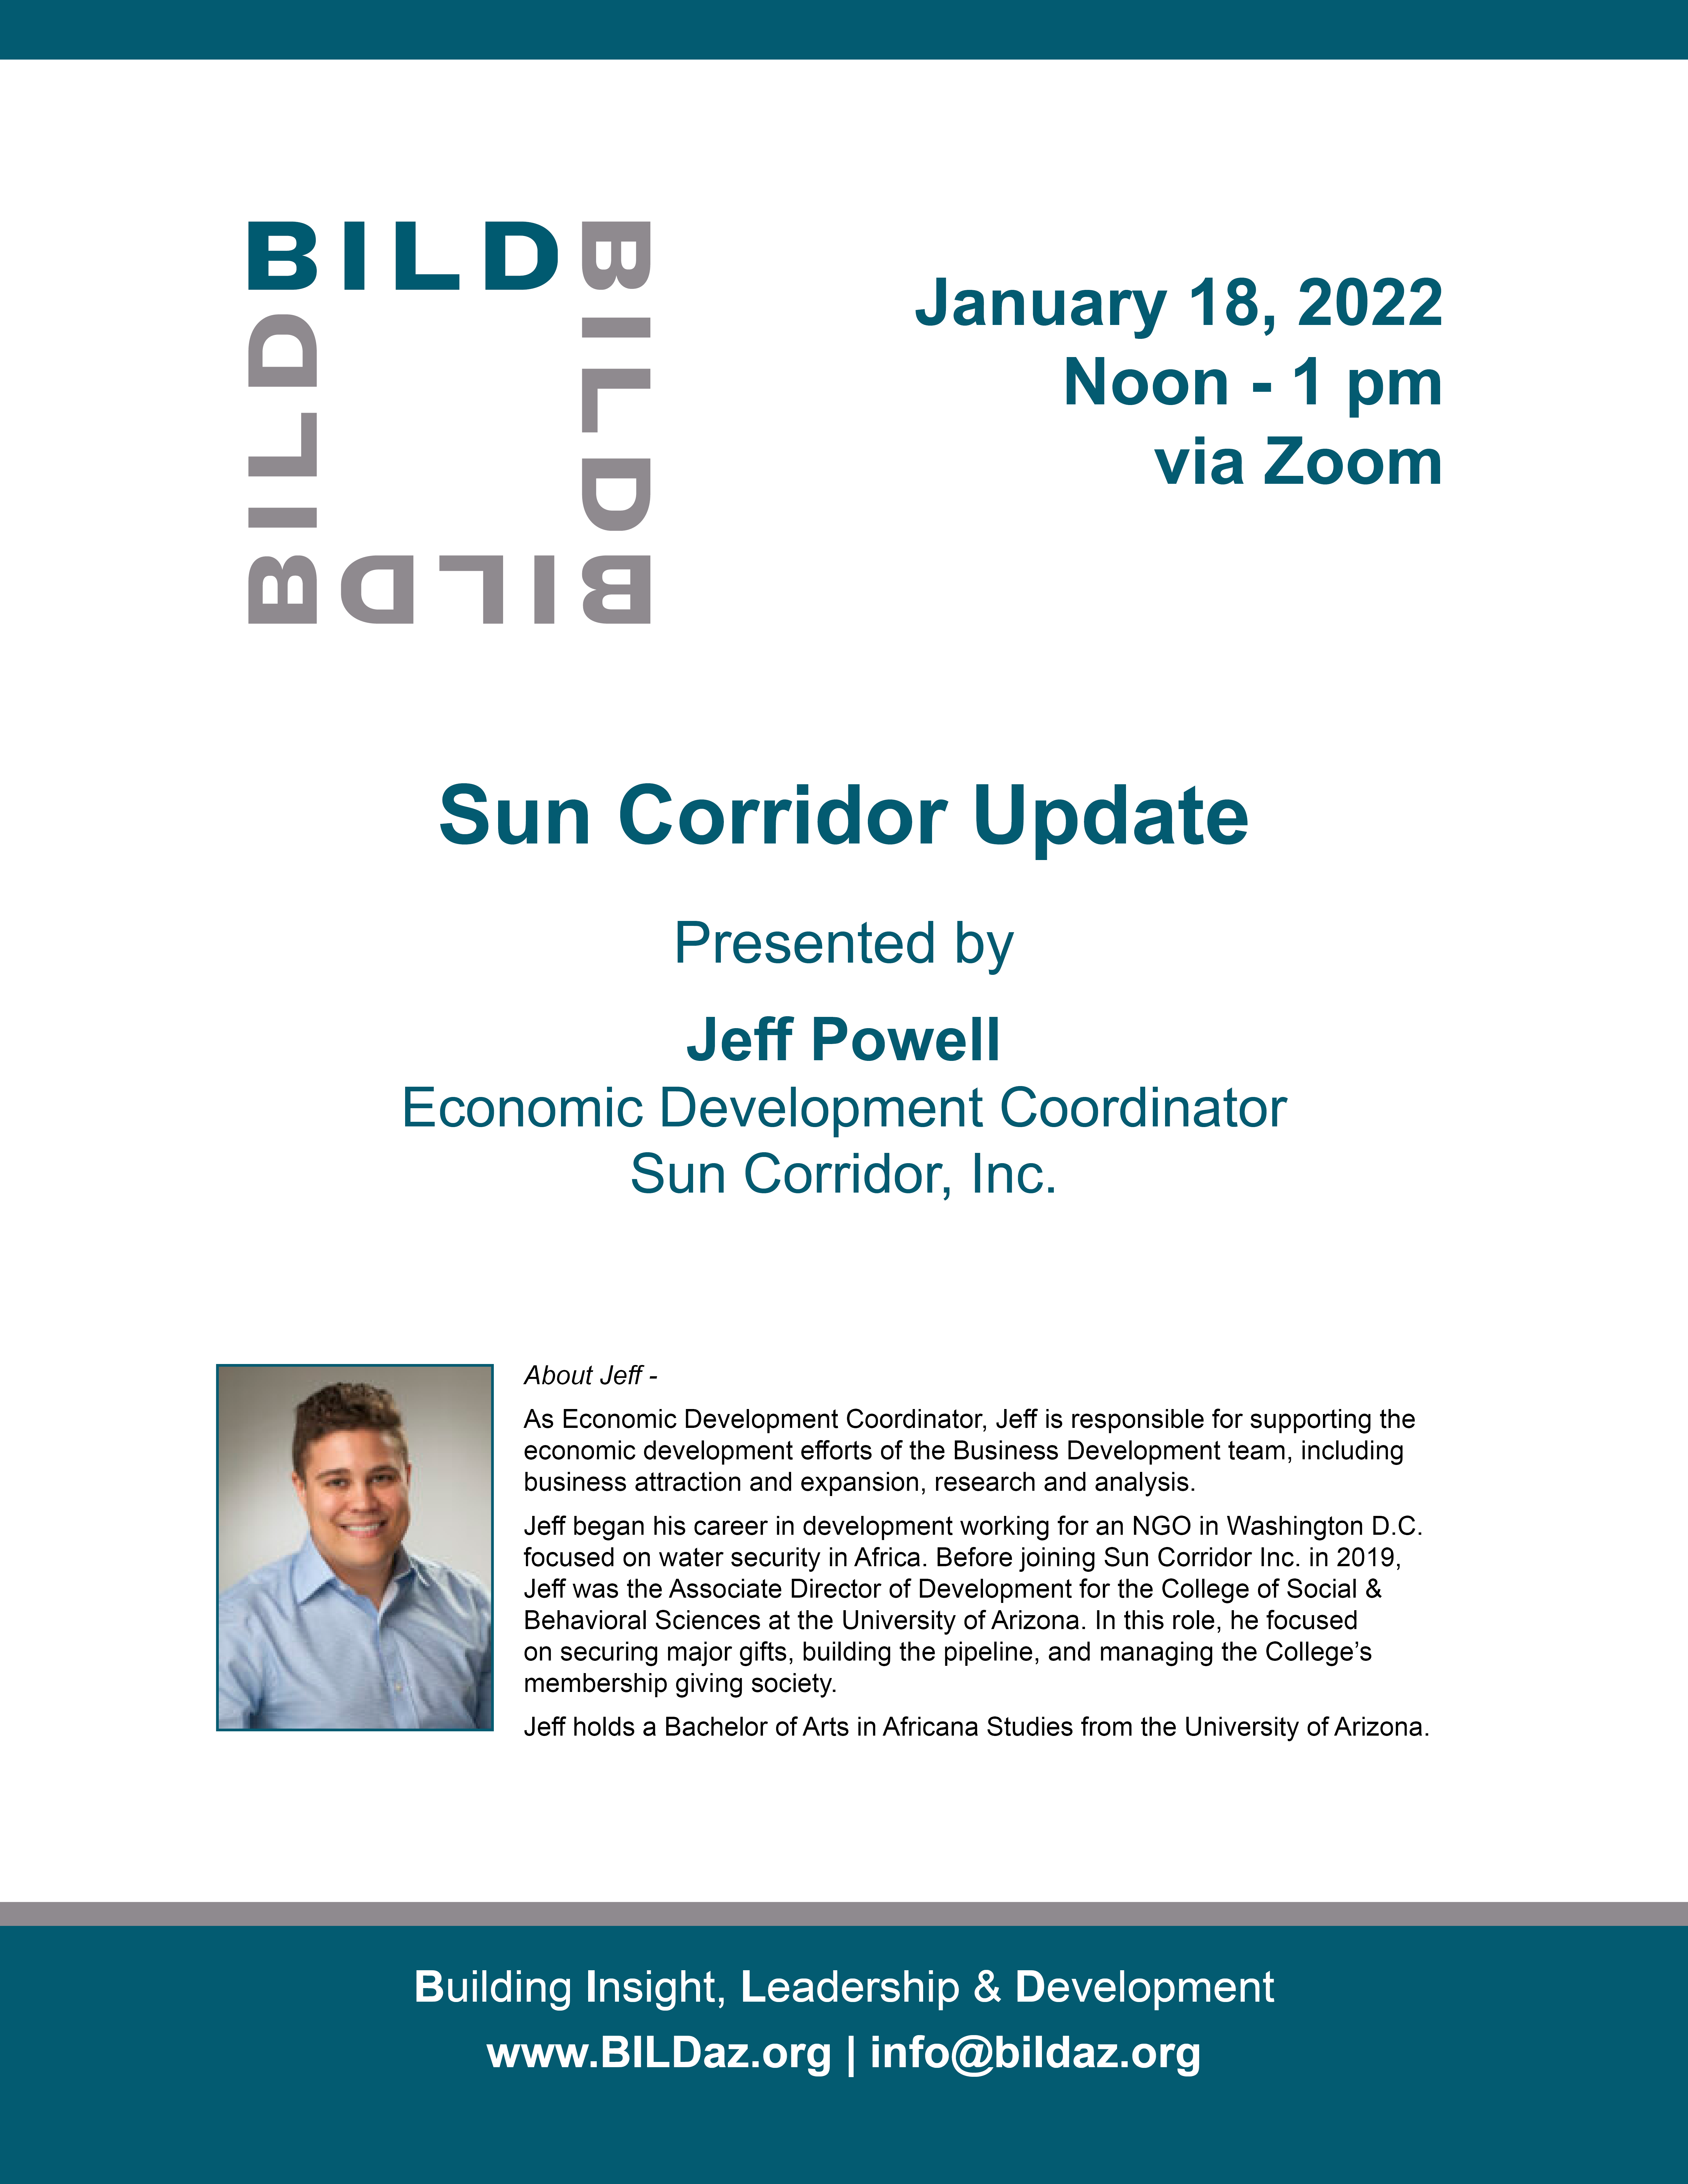 Join BILD for A Sun Corridor Update